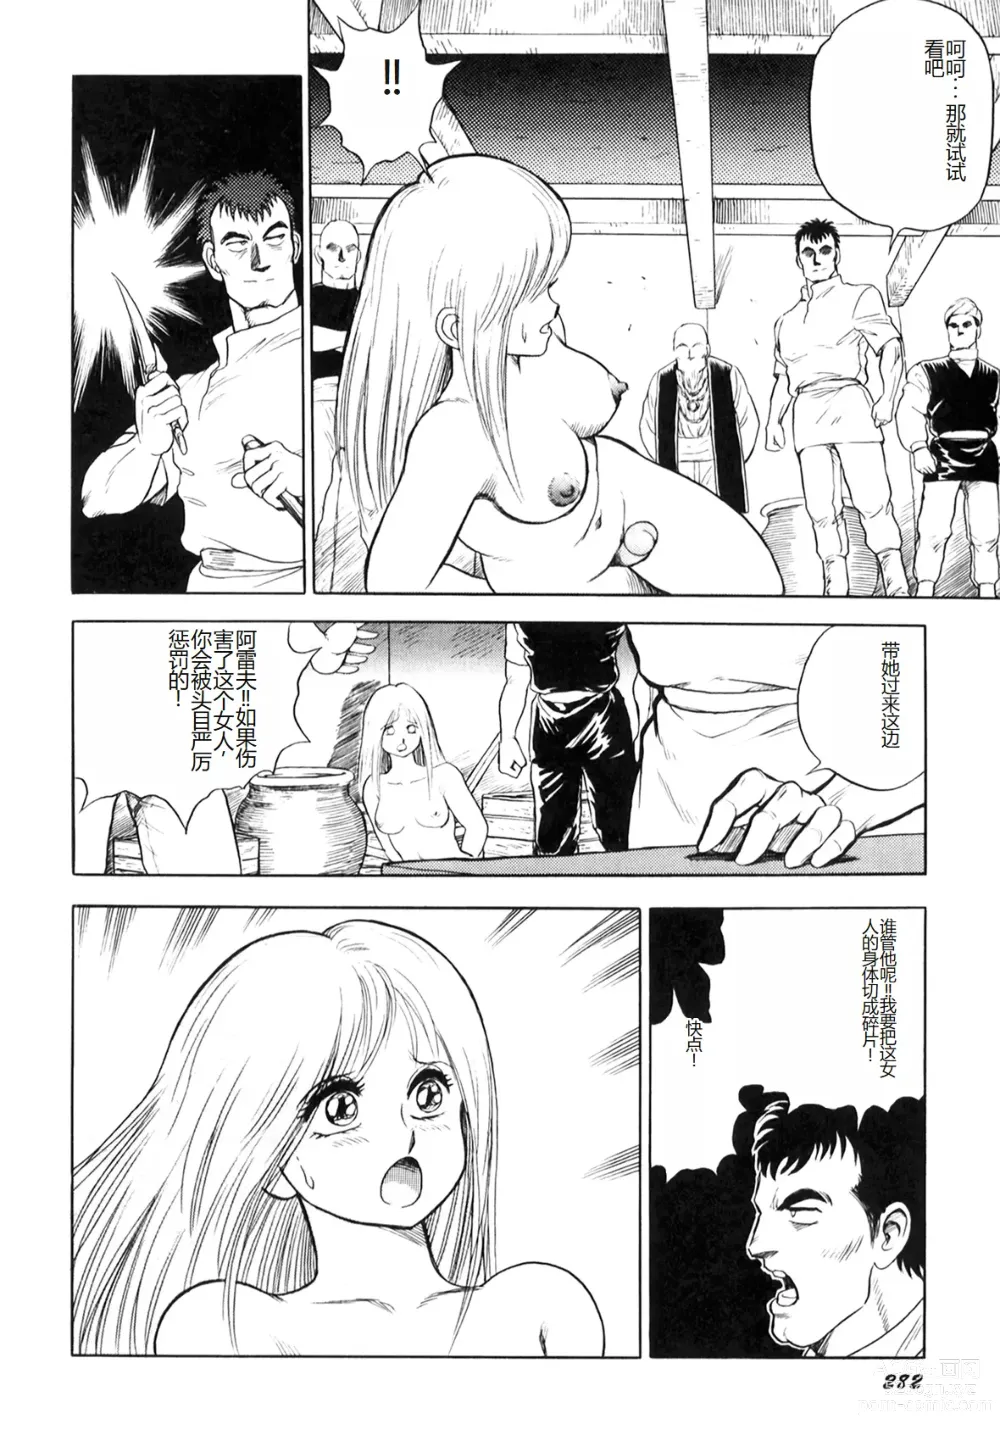 Page 283 of manga Dorei Senshi Maya I